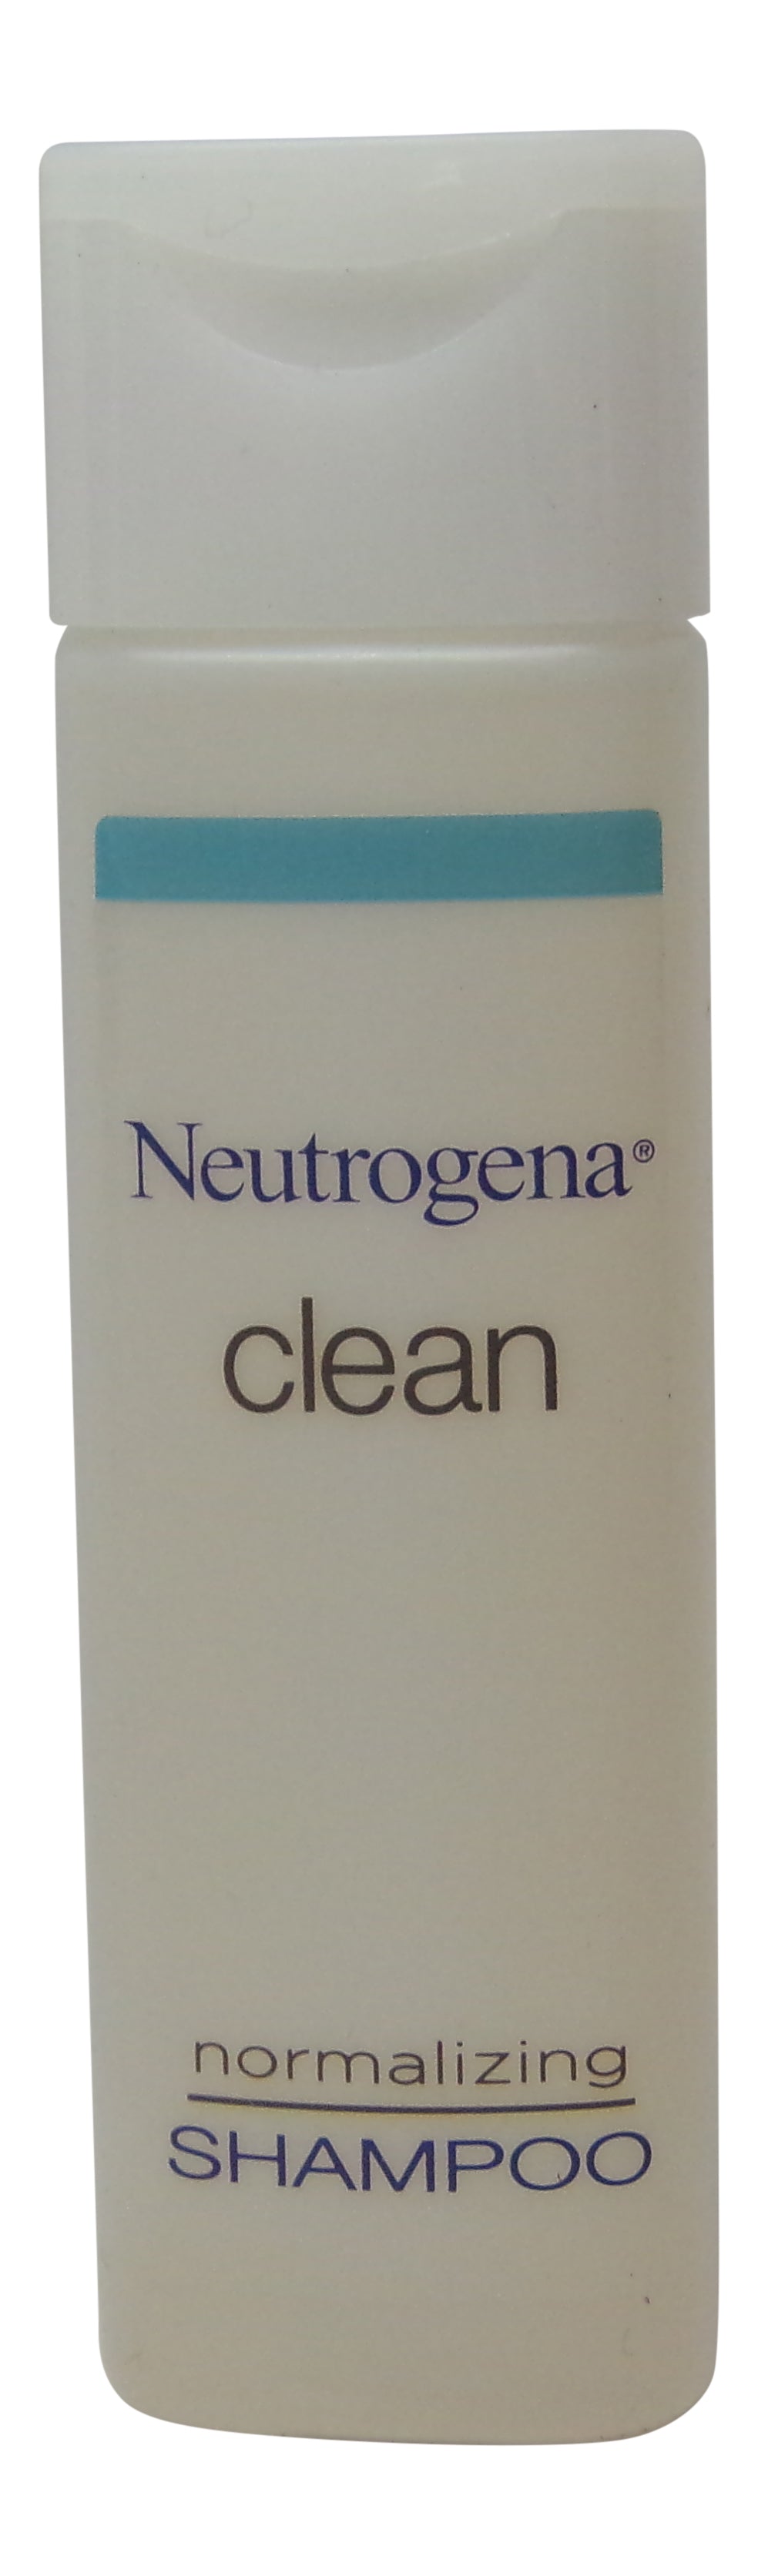 Neutrogena Clean Normalizing Shampoo & Conditioner lot of 10 (5 of ea) 0.8oz Bottles.